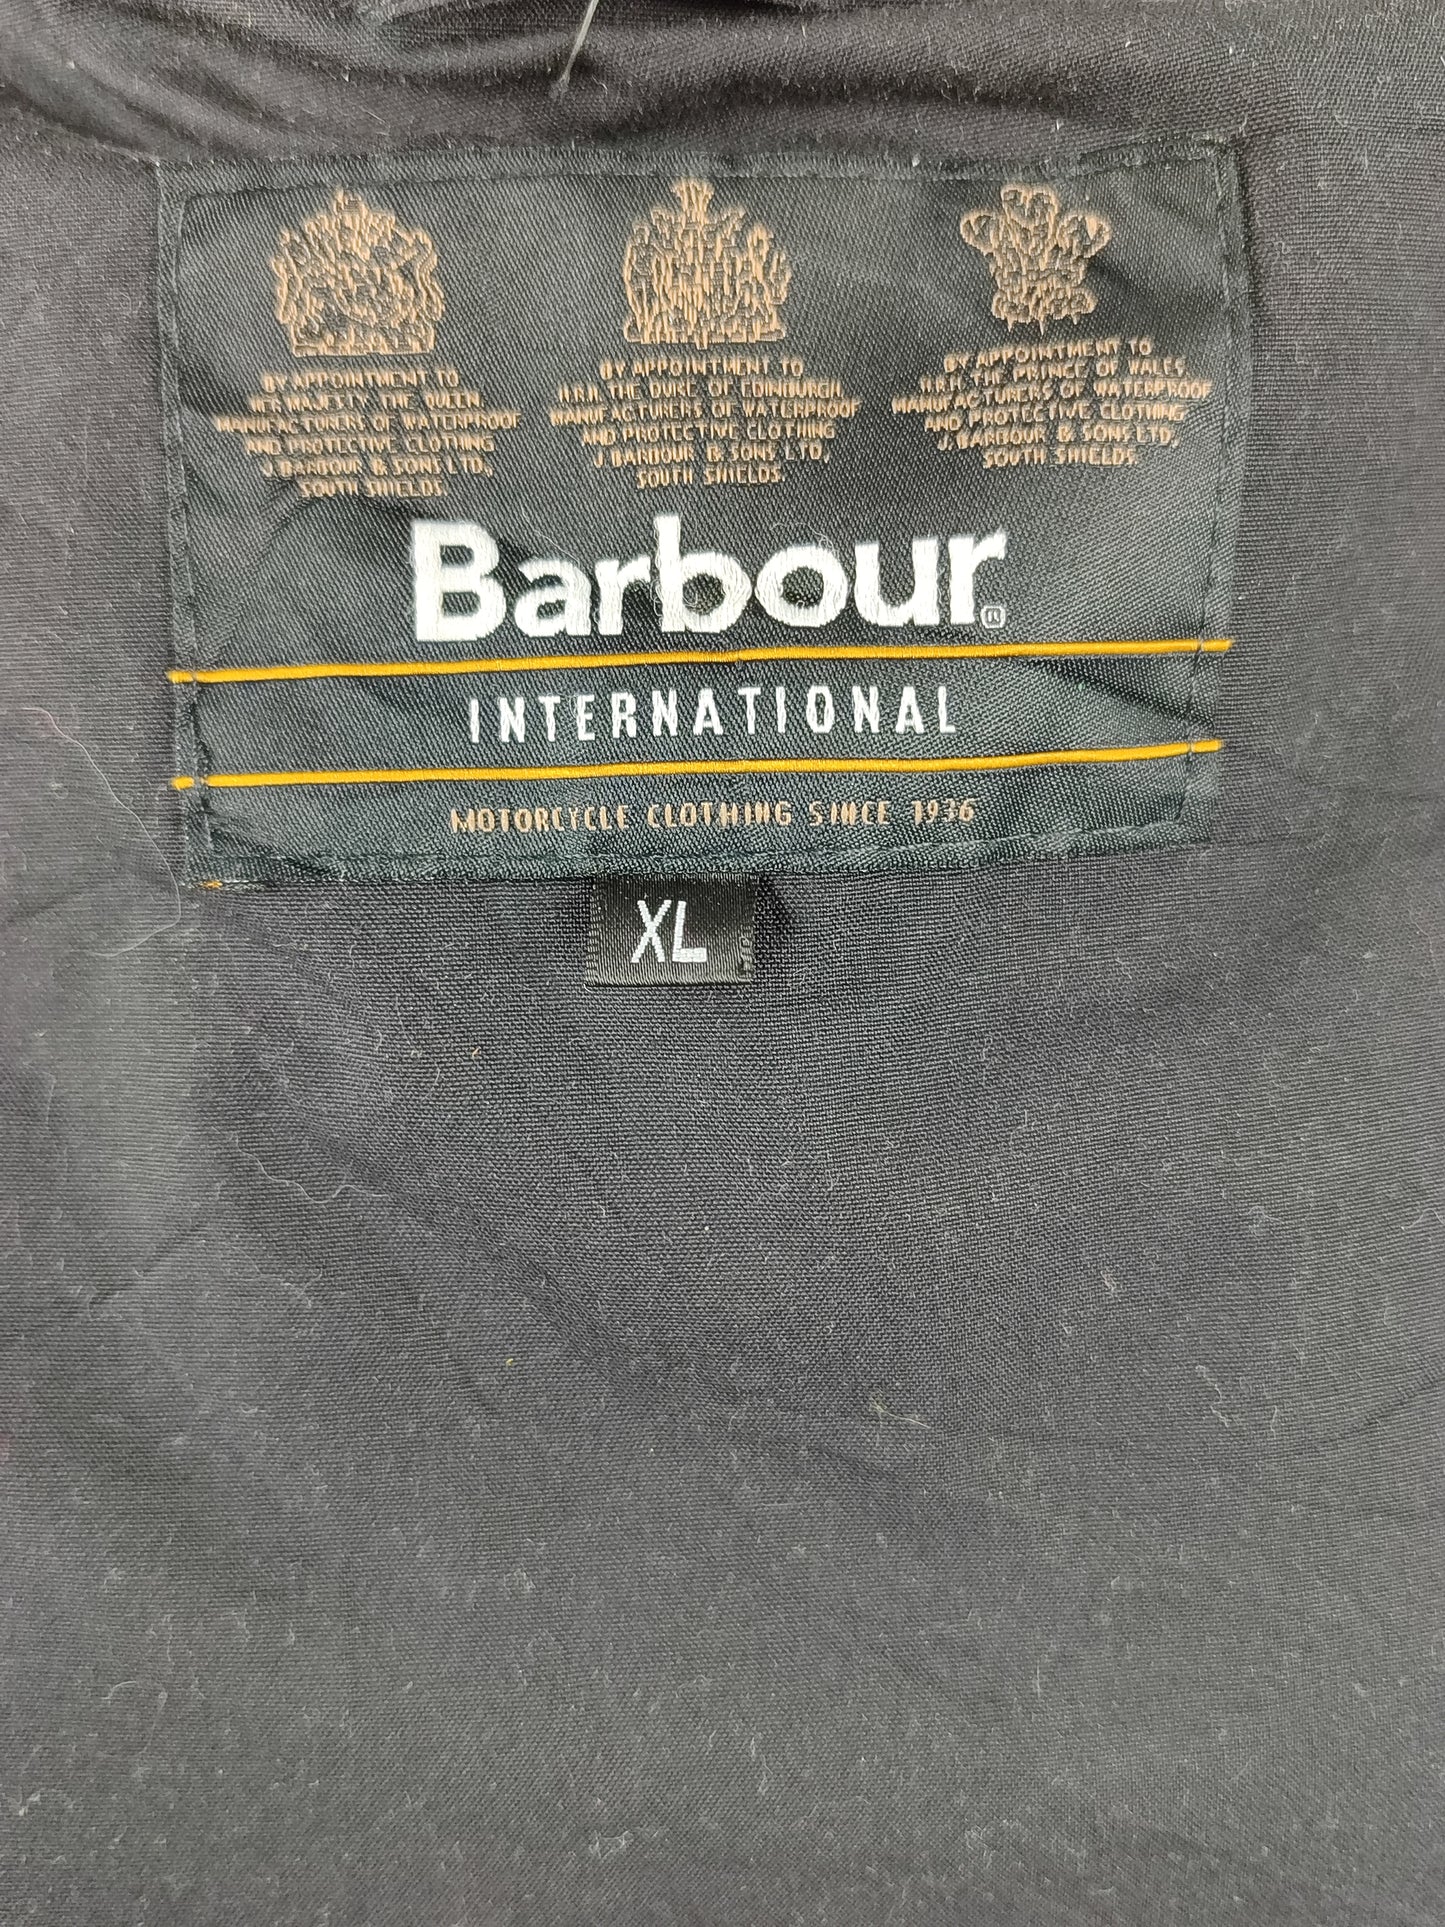 Giacca uomo Barbour International blu XL- Man Barbour International Gauging blue size XL